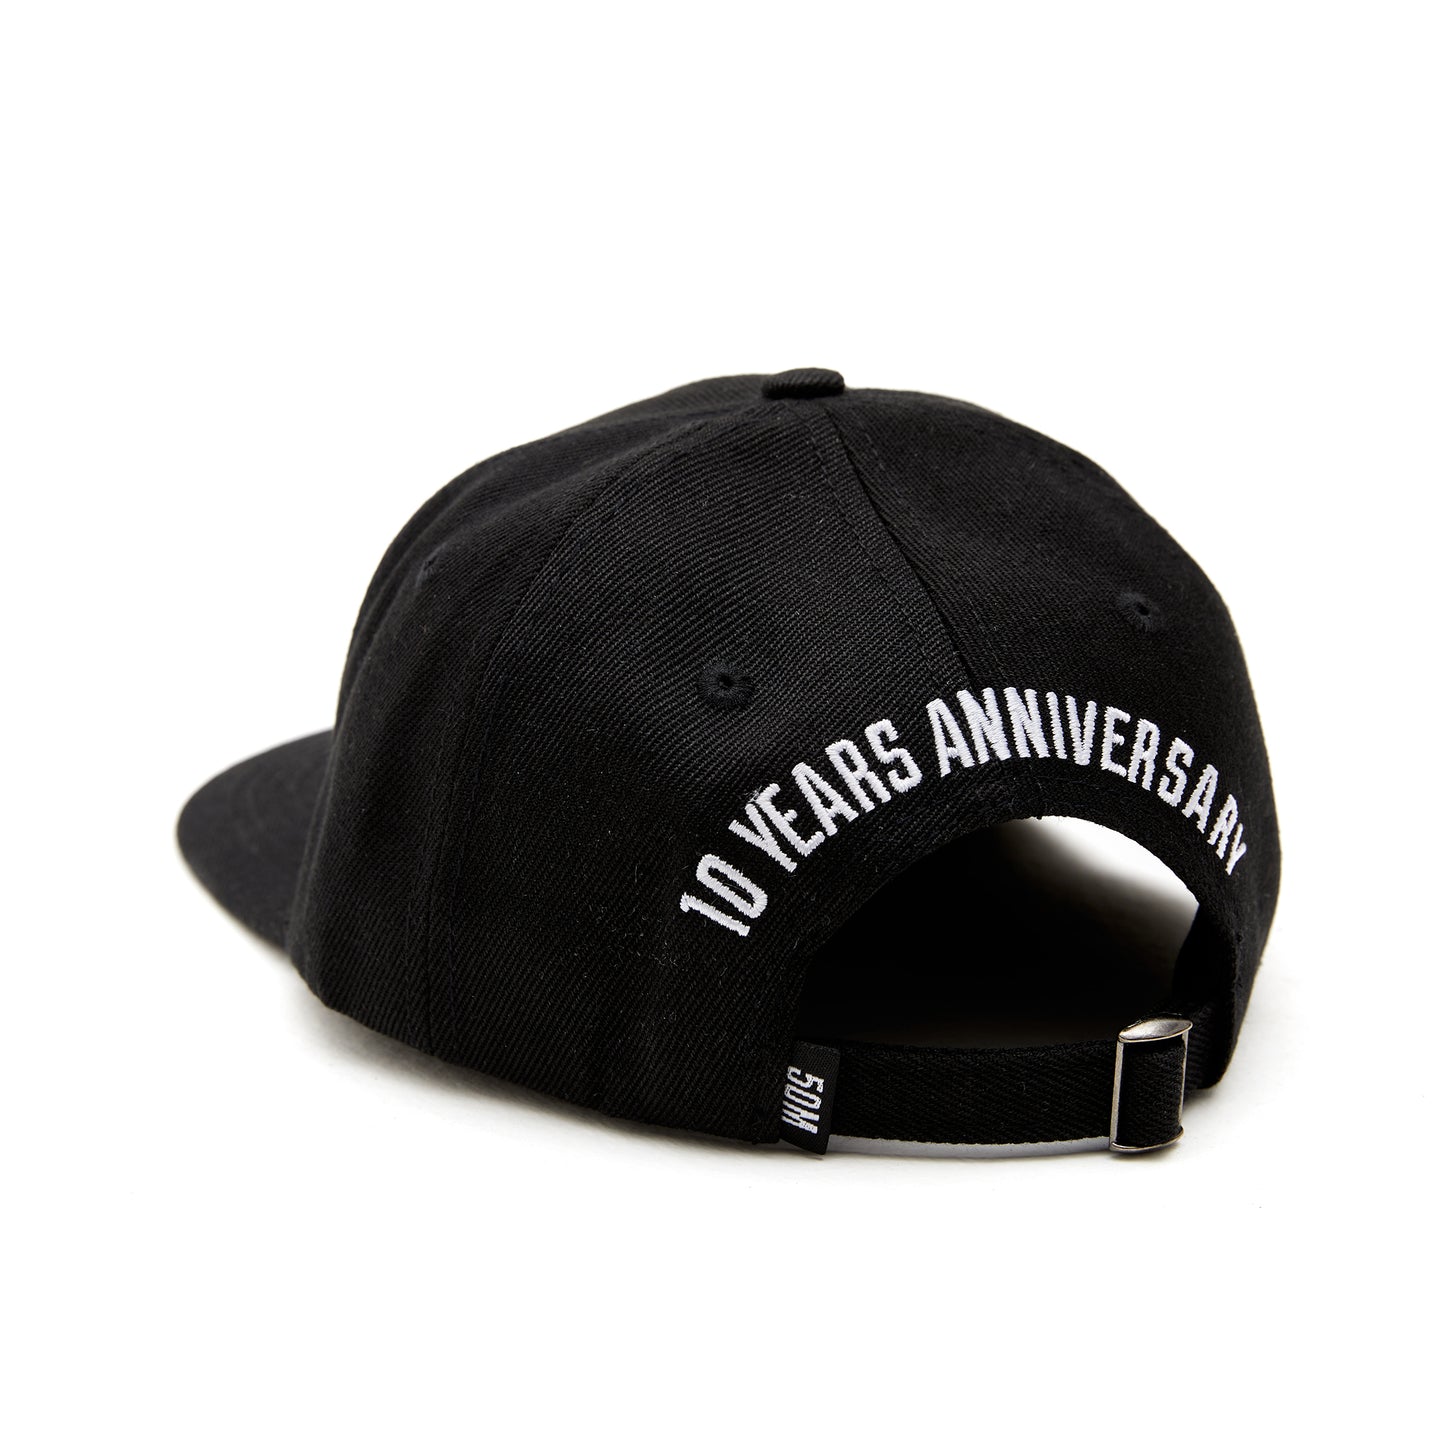 "25th SSS anniversary" snapback black